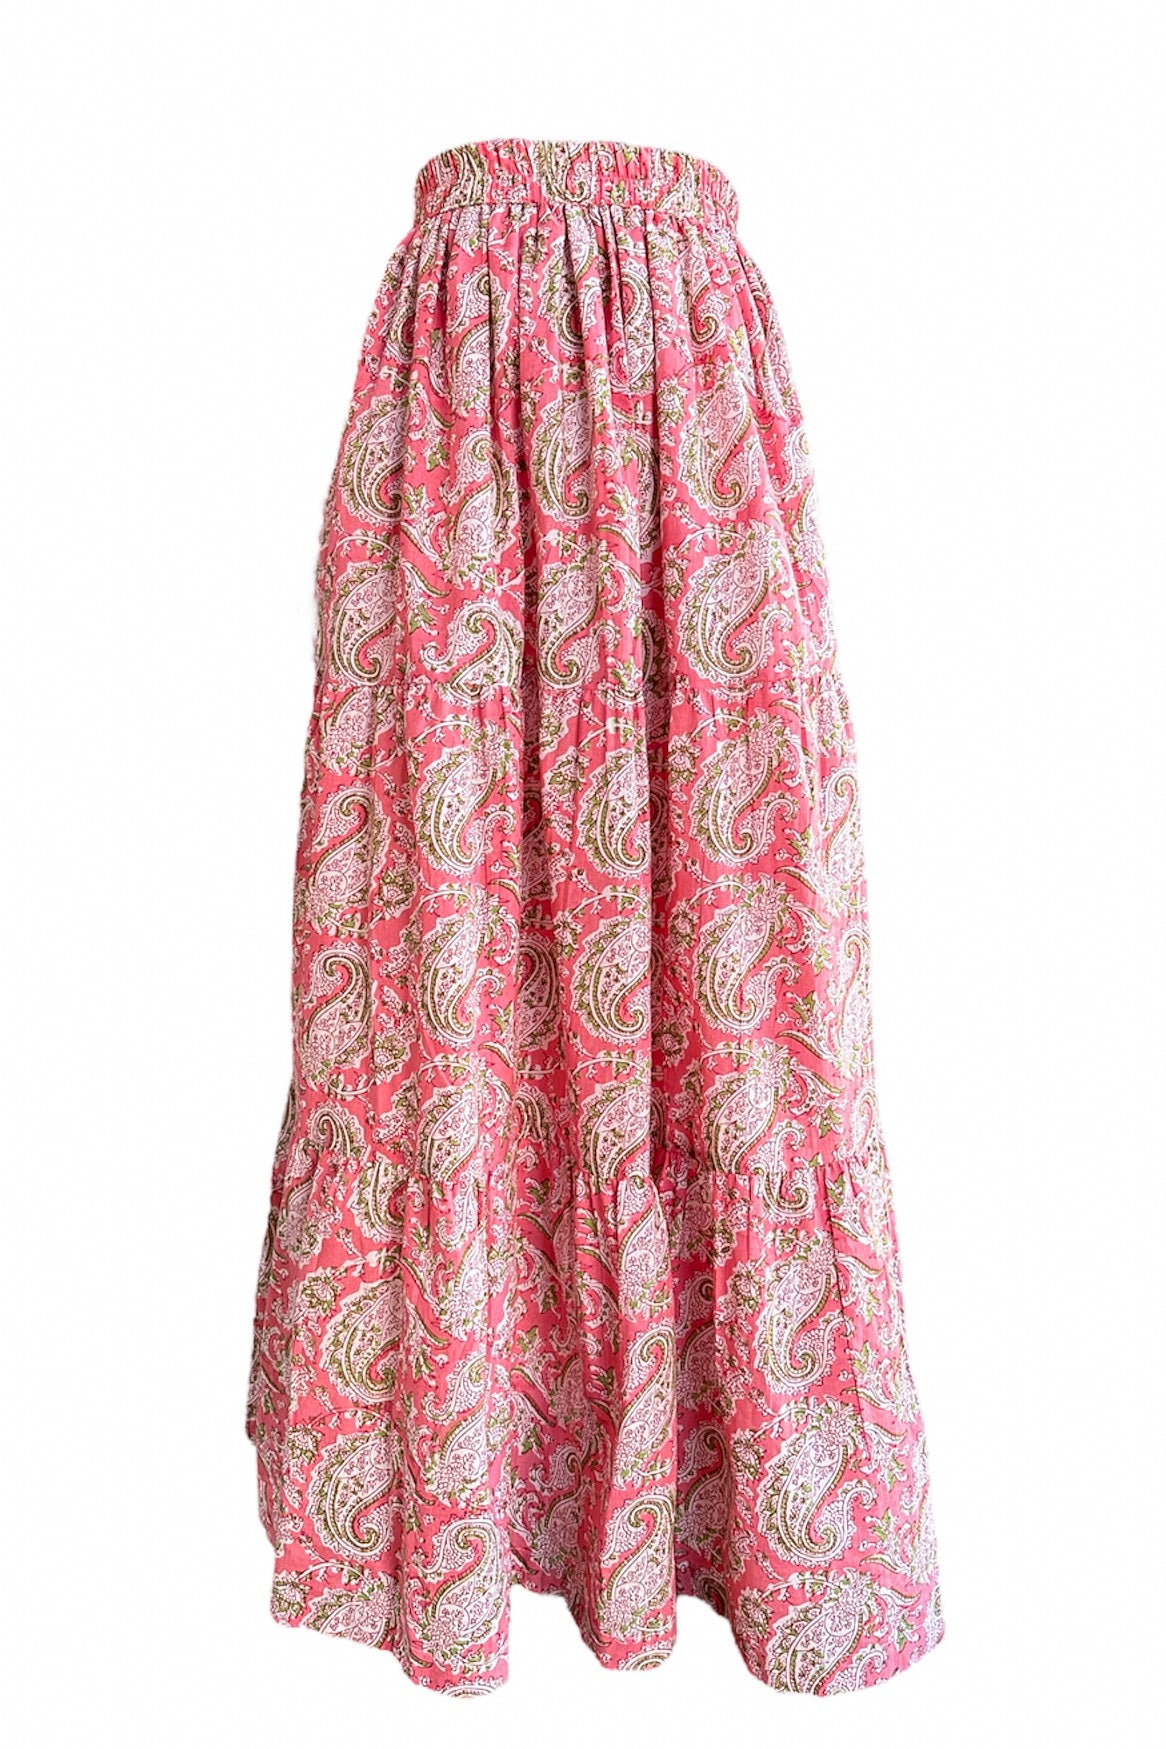 Amelia Paisley Maxi Skirt